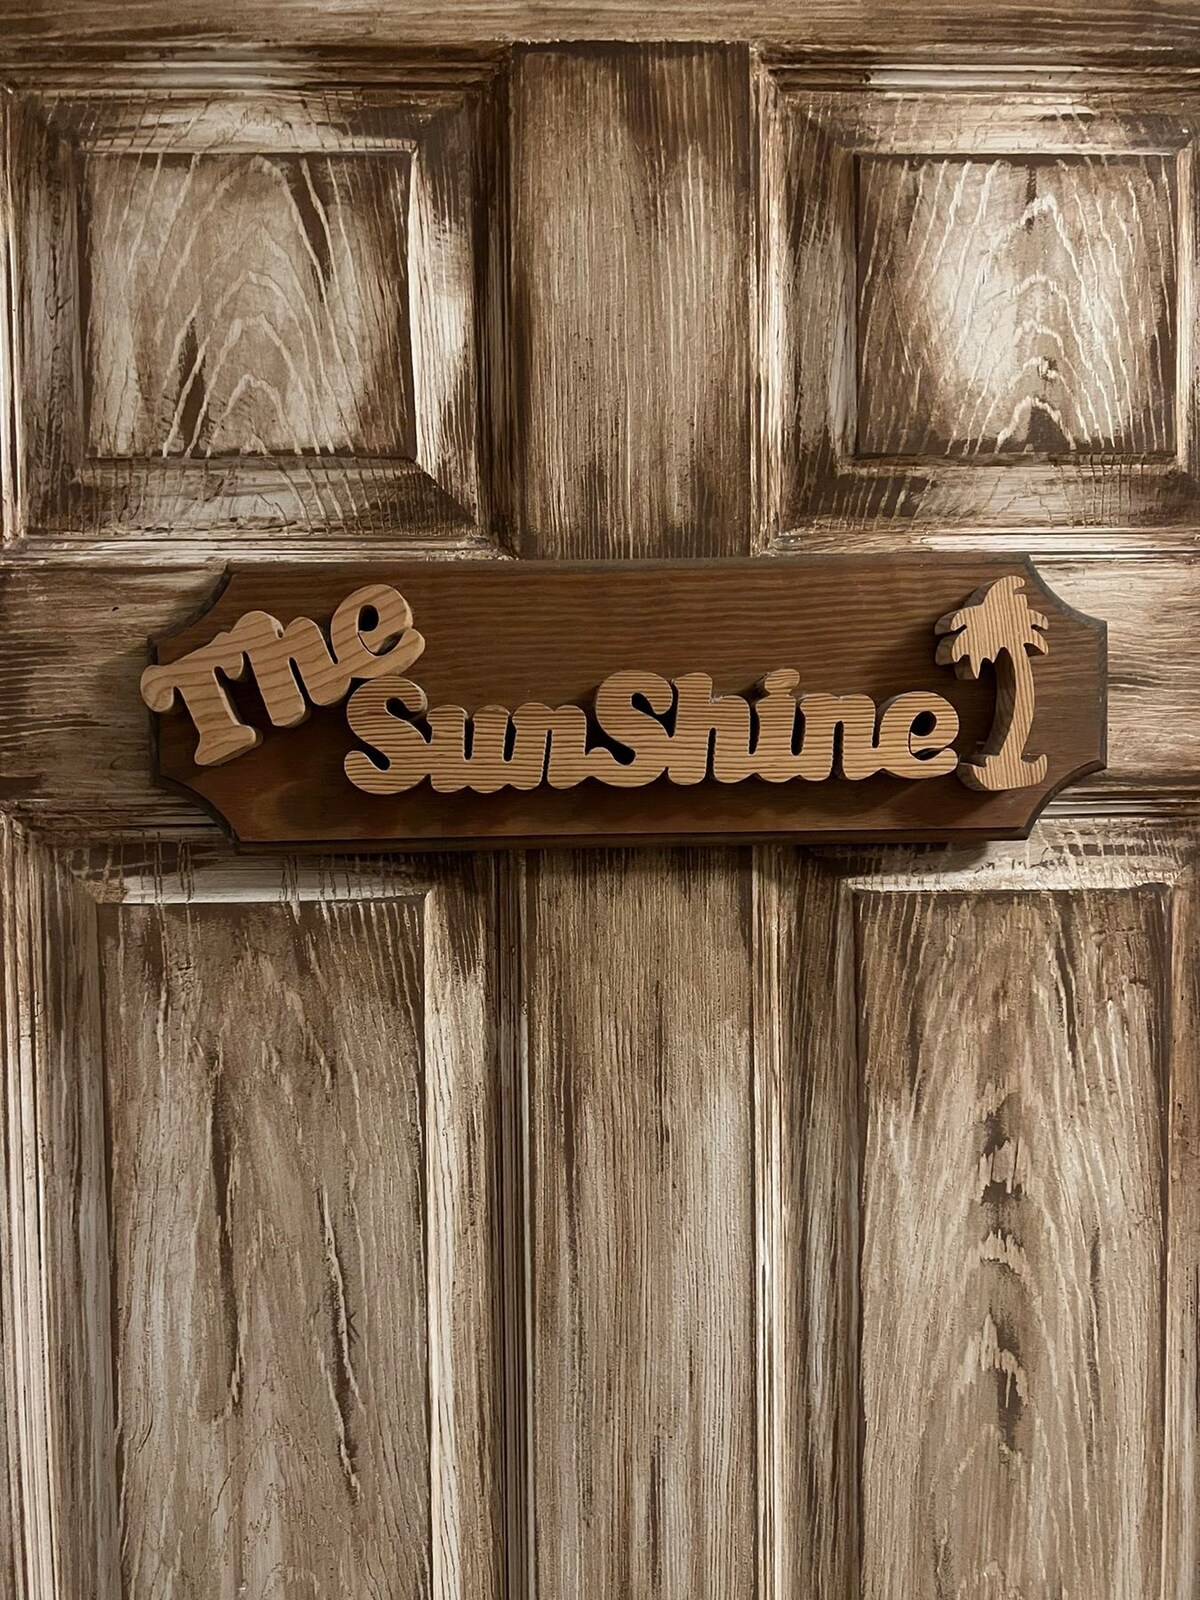 The SunShine单人房